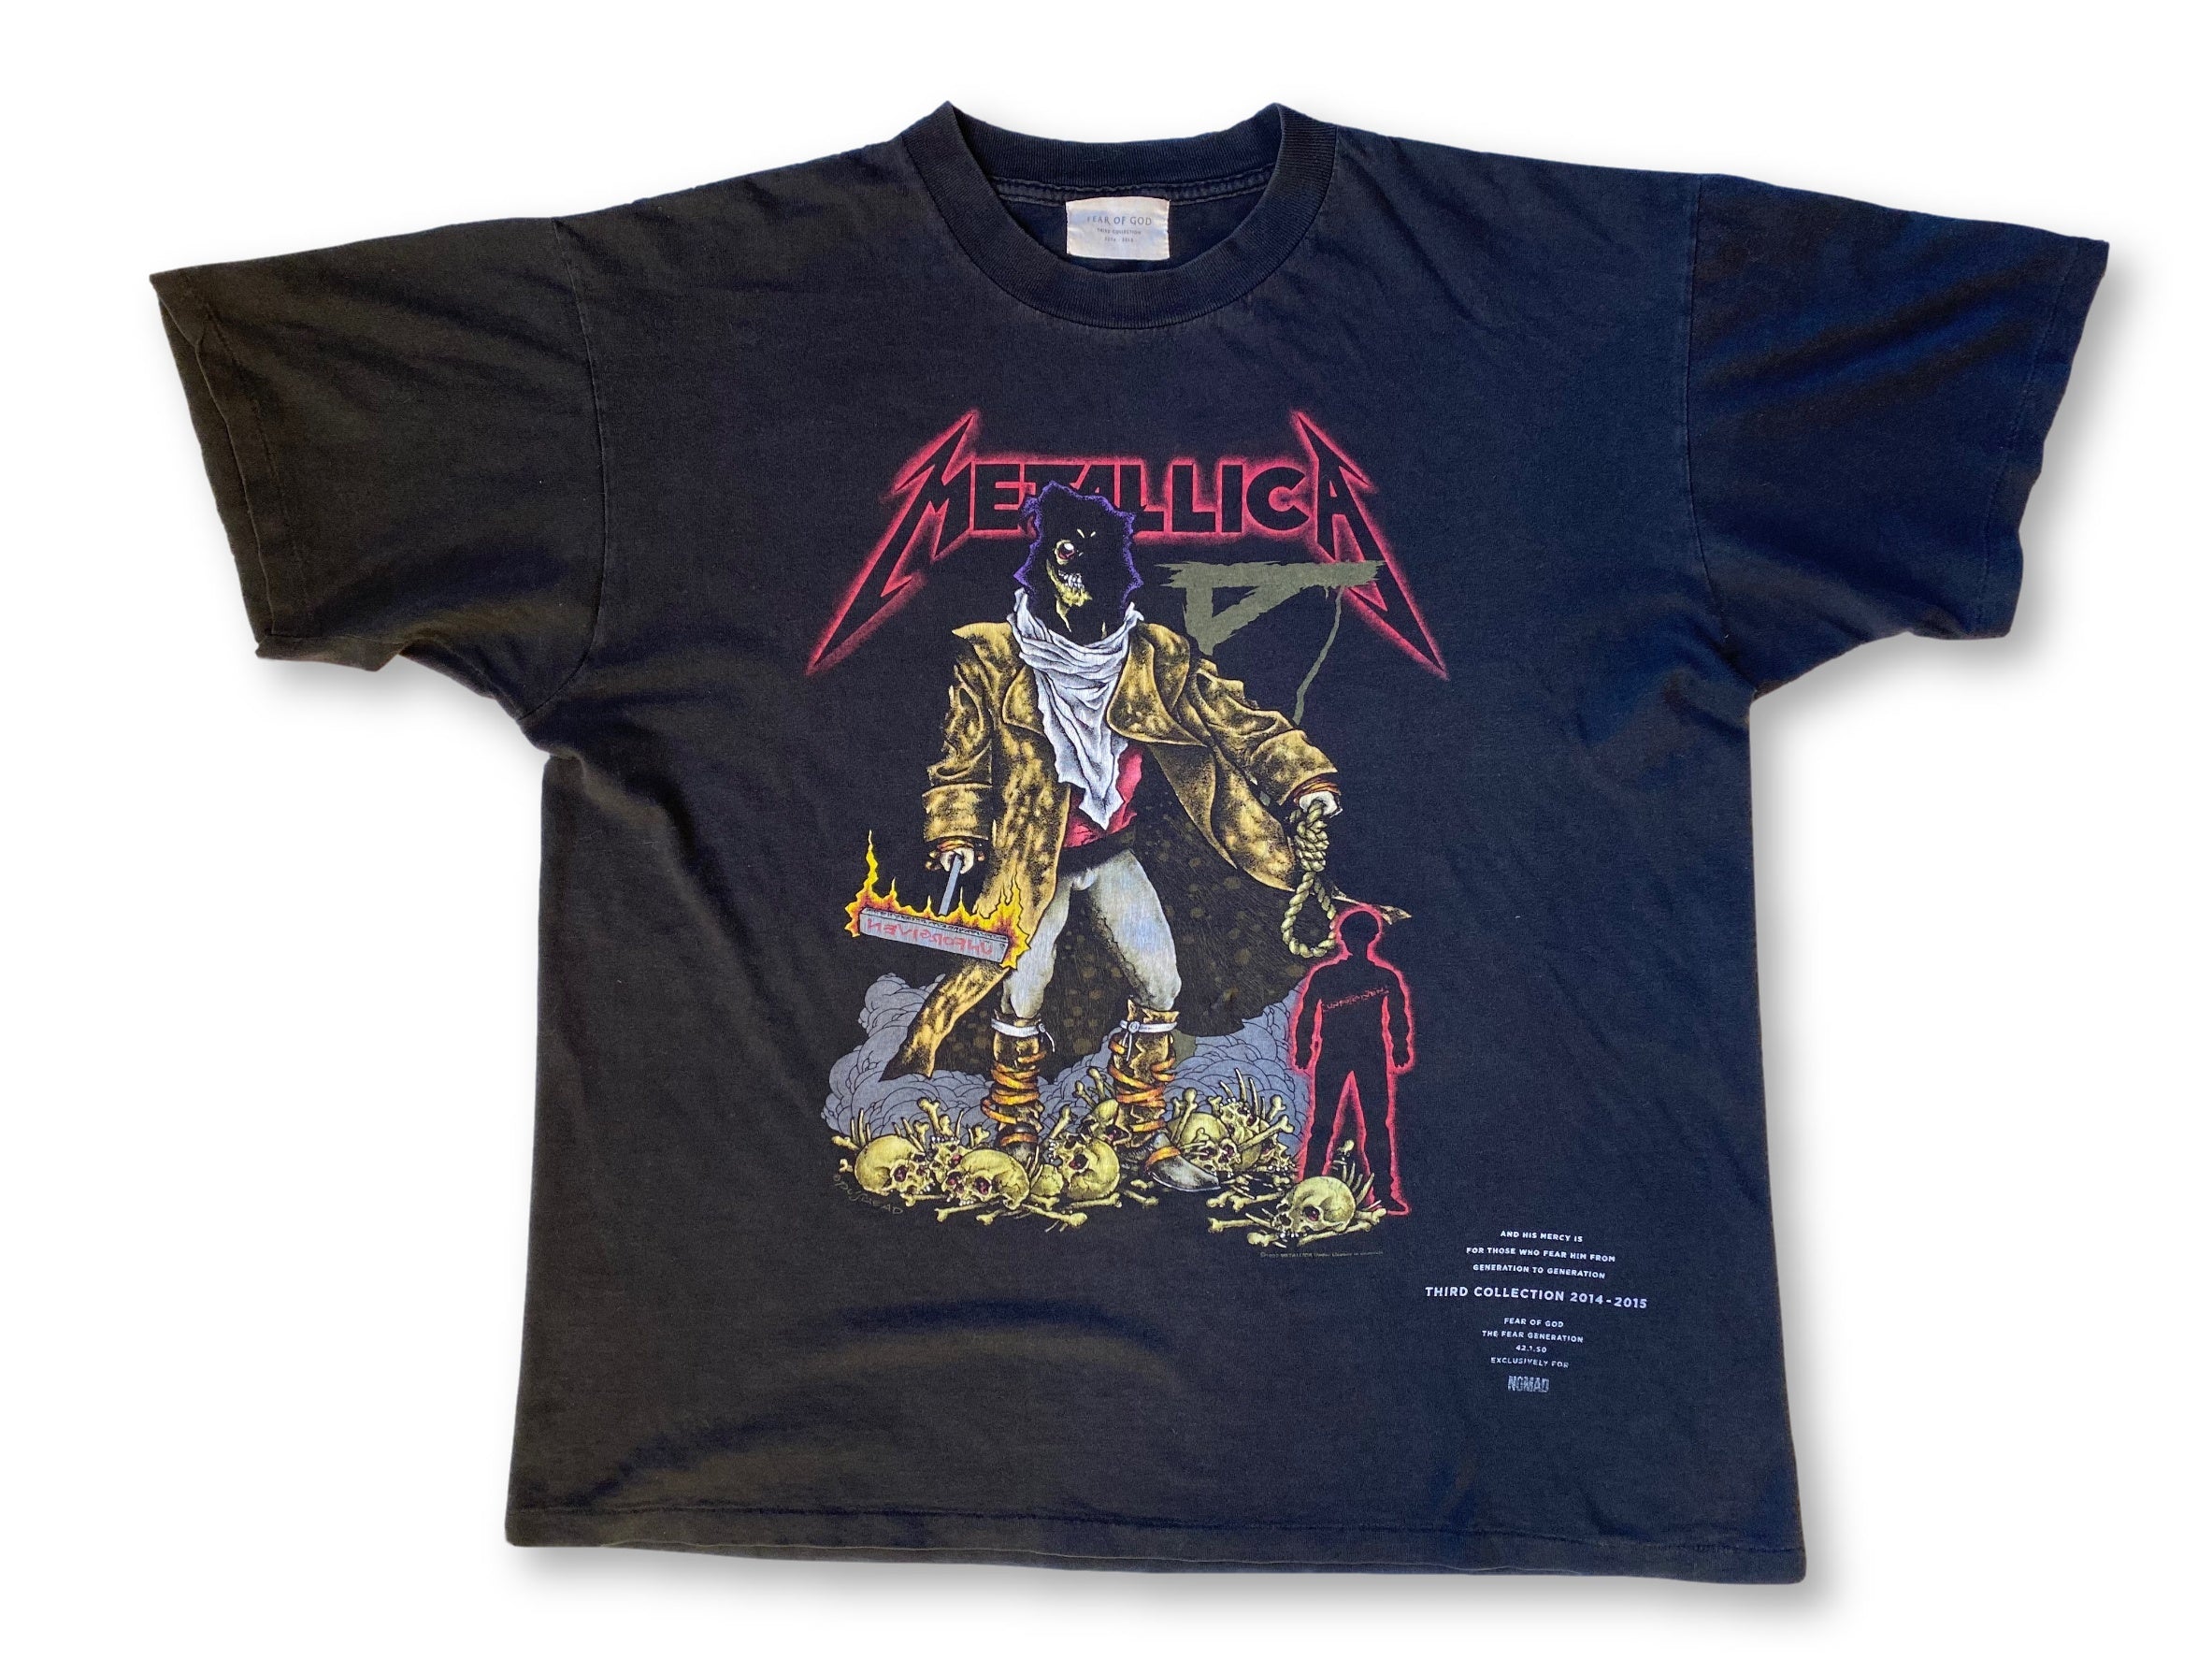 Vintage Metallica x Fear of God Rock T-Shirt - XL